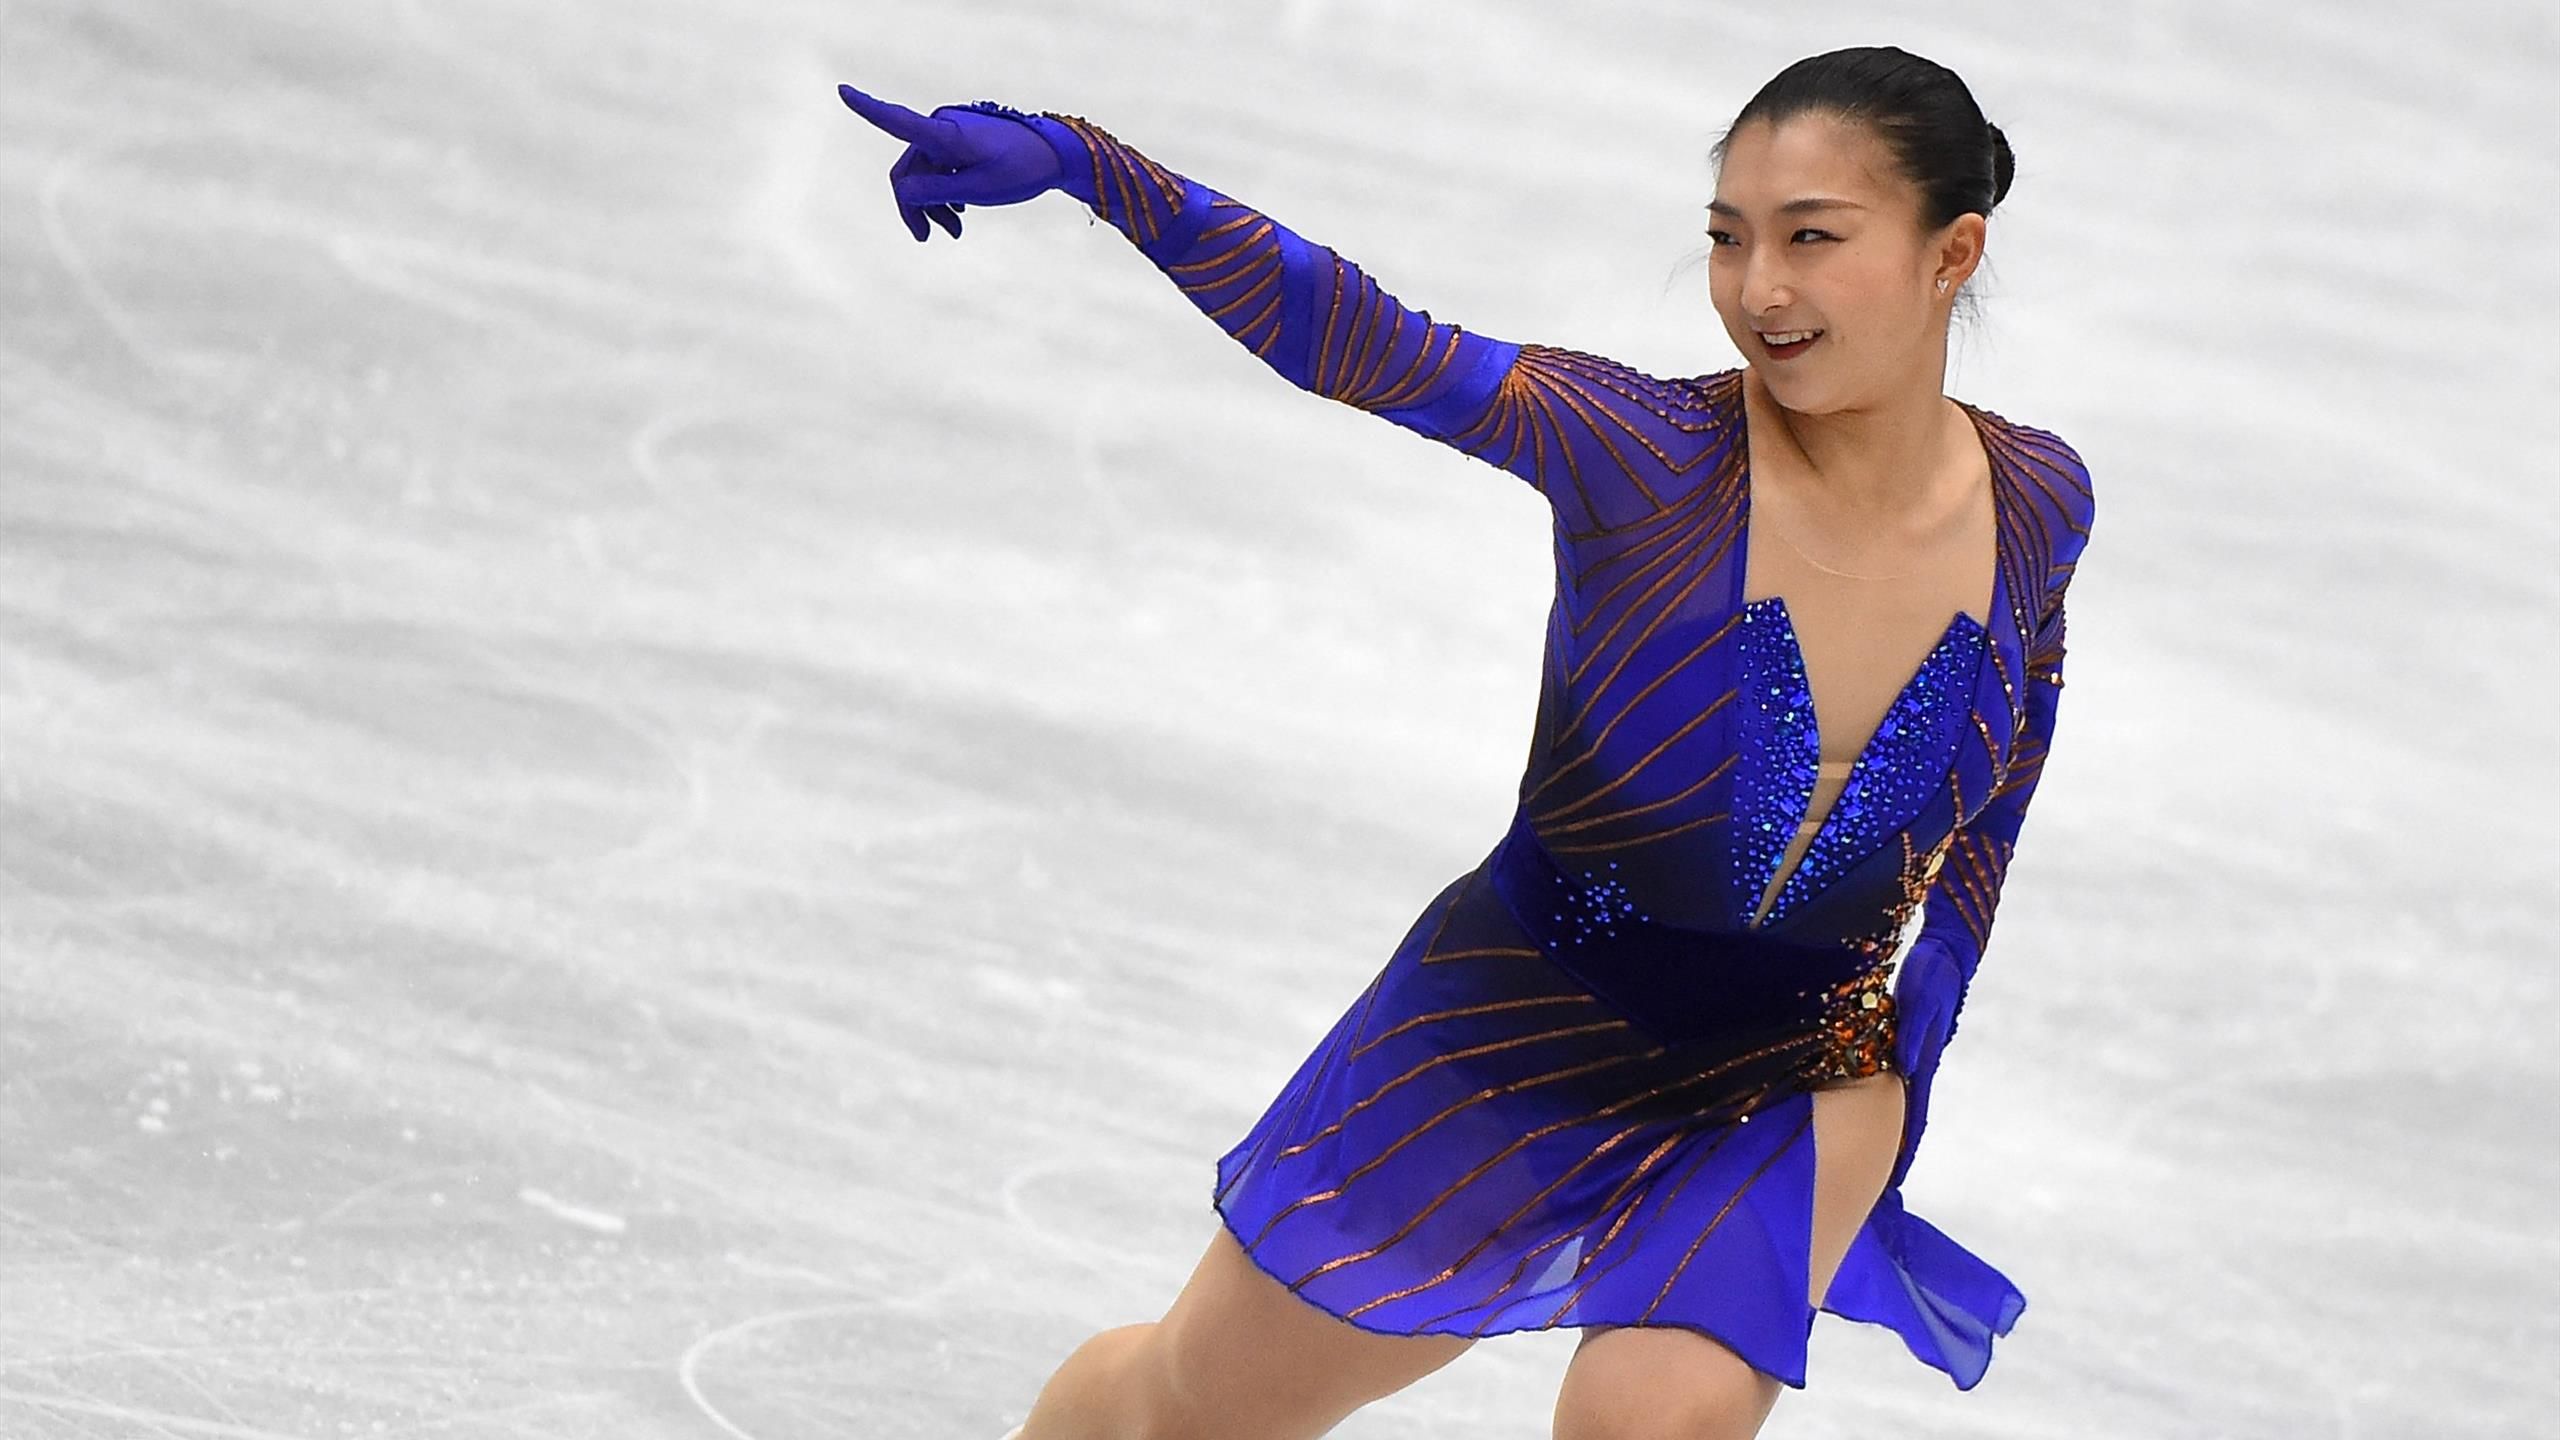 Kaori Sakamoto comprehensively wins world title at ISU World Figure Skating Championships in Montpellier